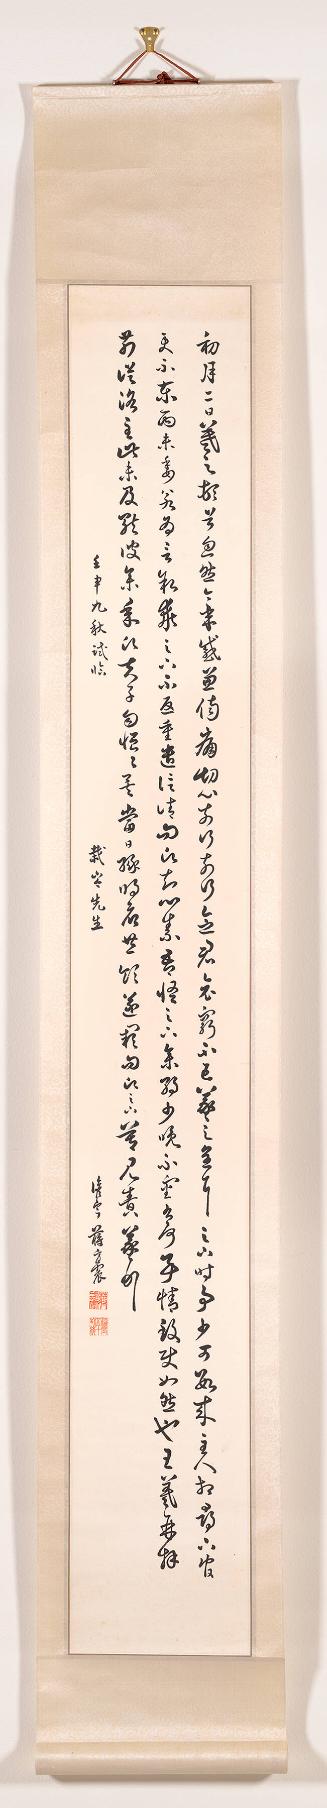 Transcription of Chuyue Tie